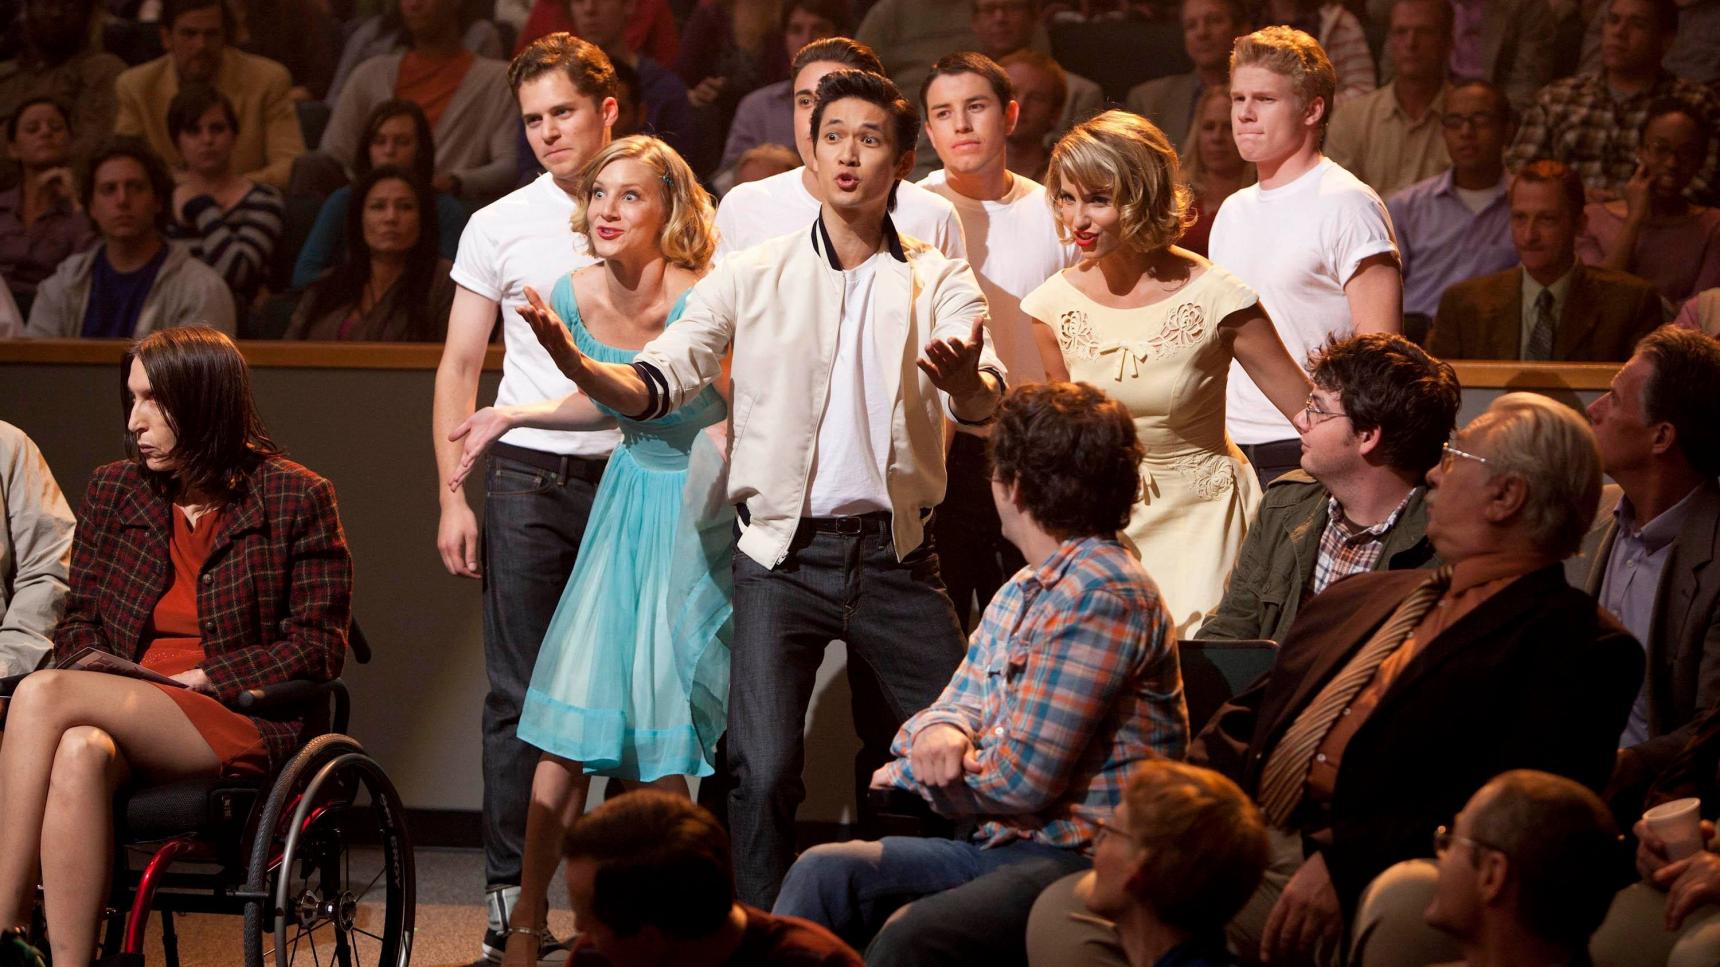 Poster del episodio 5 de Glee online